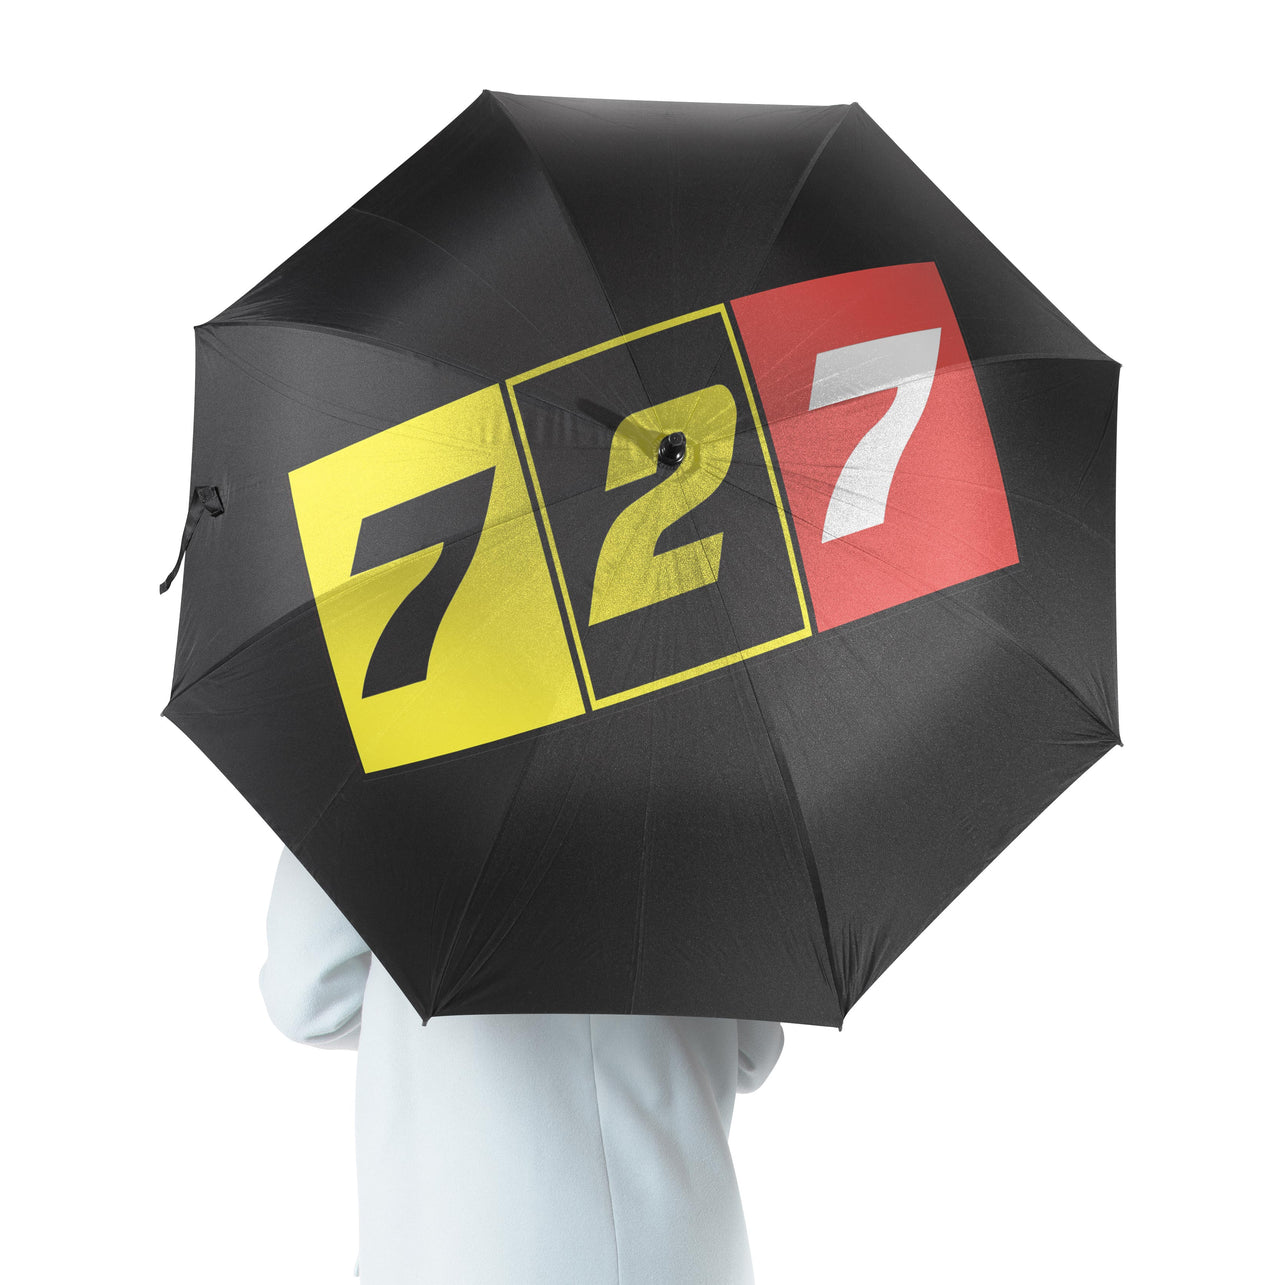 Flat Colourful 727 Designed Umbrella